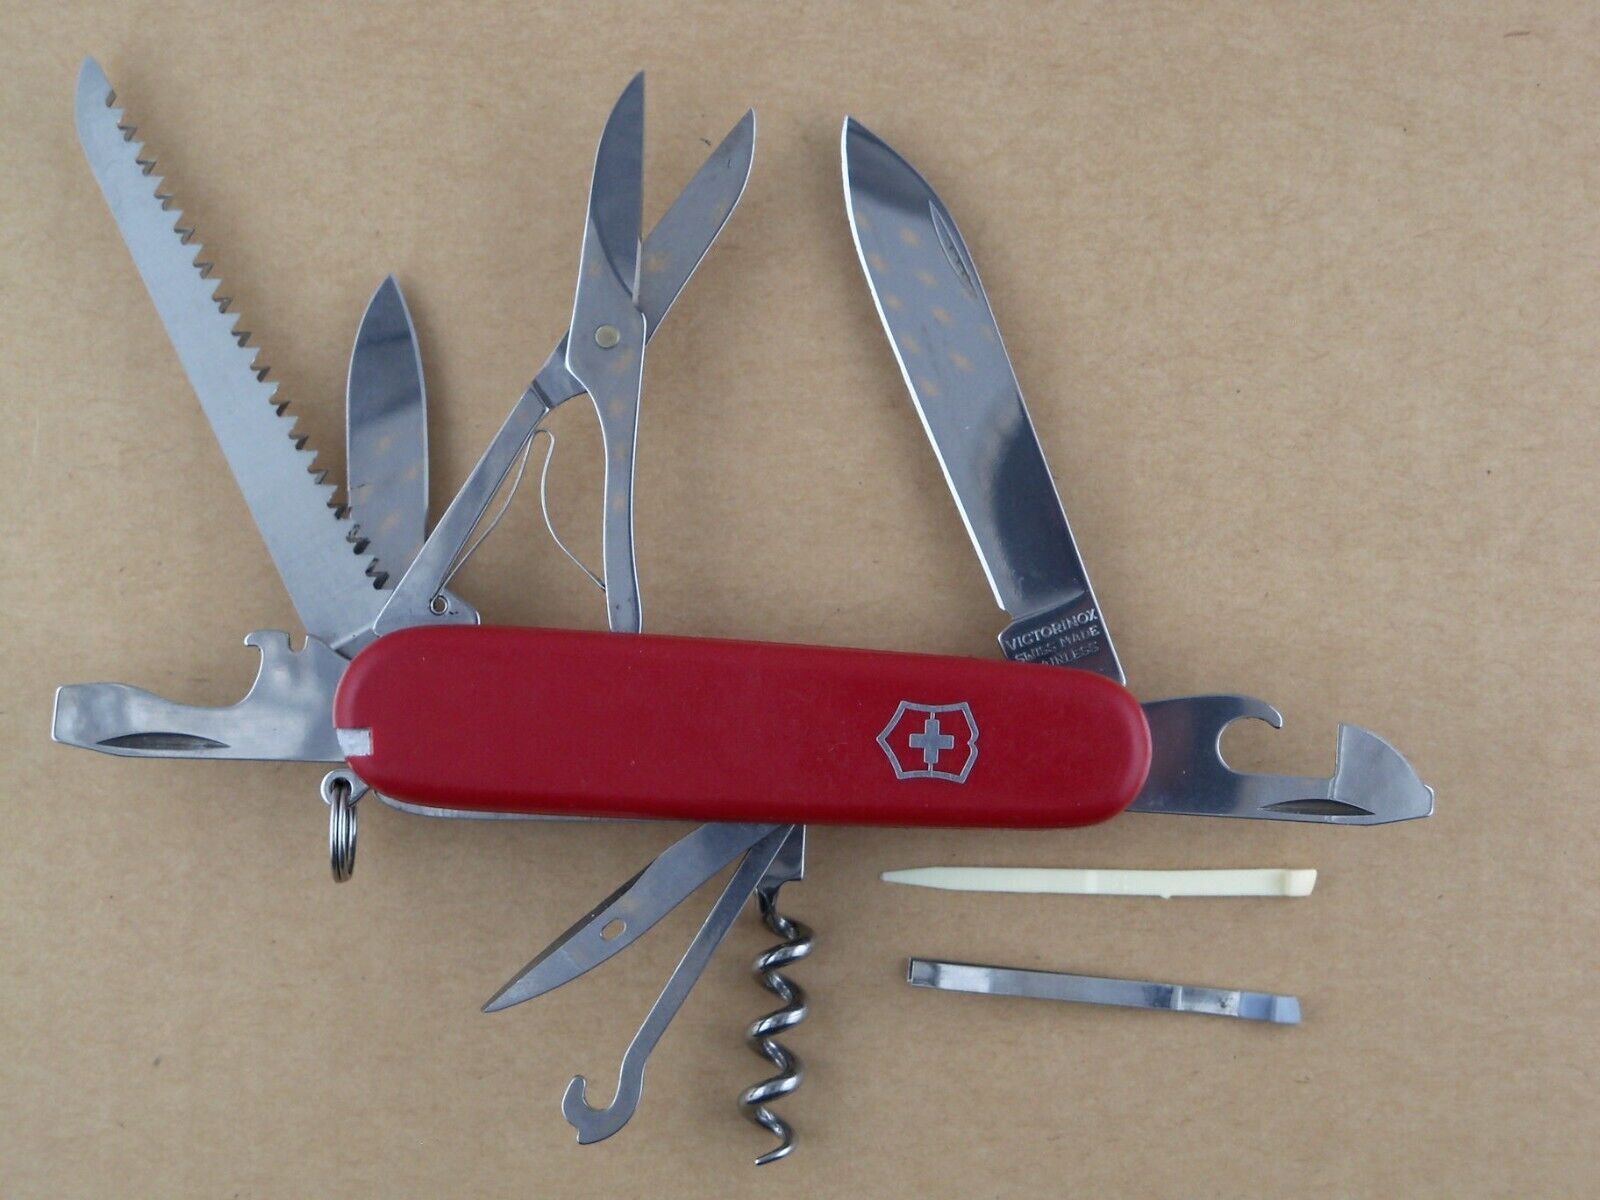 Victorinox Huntsman Swiss Army Pocket Knife - Red - Scissors & Saw - Very Good